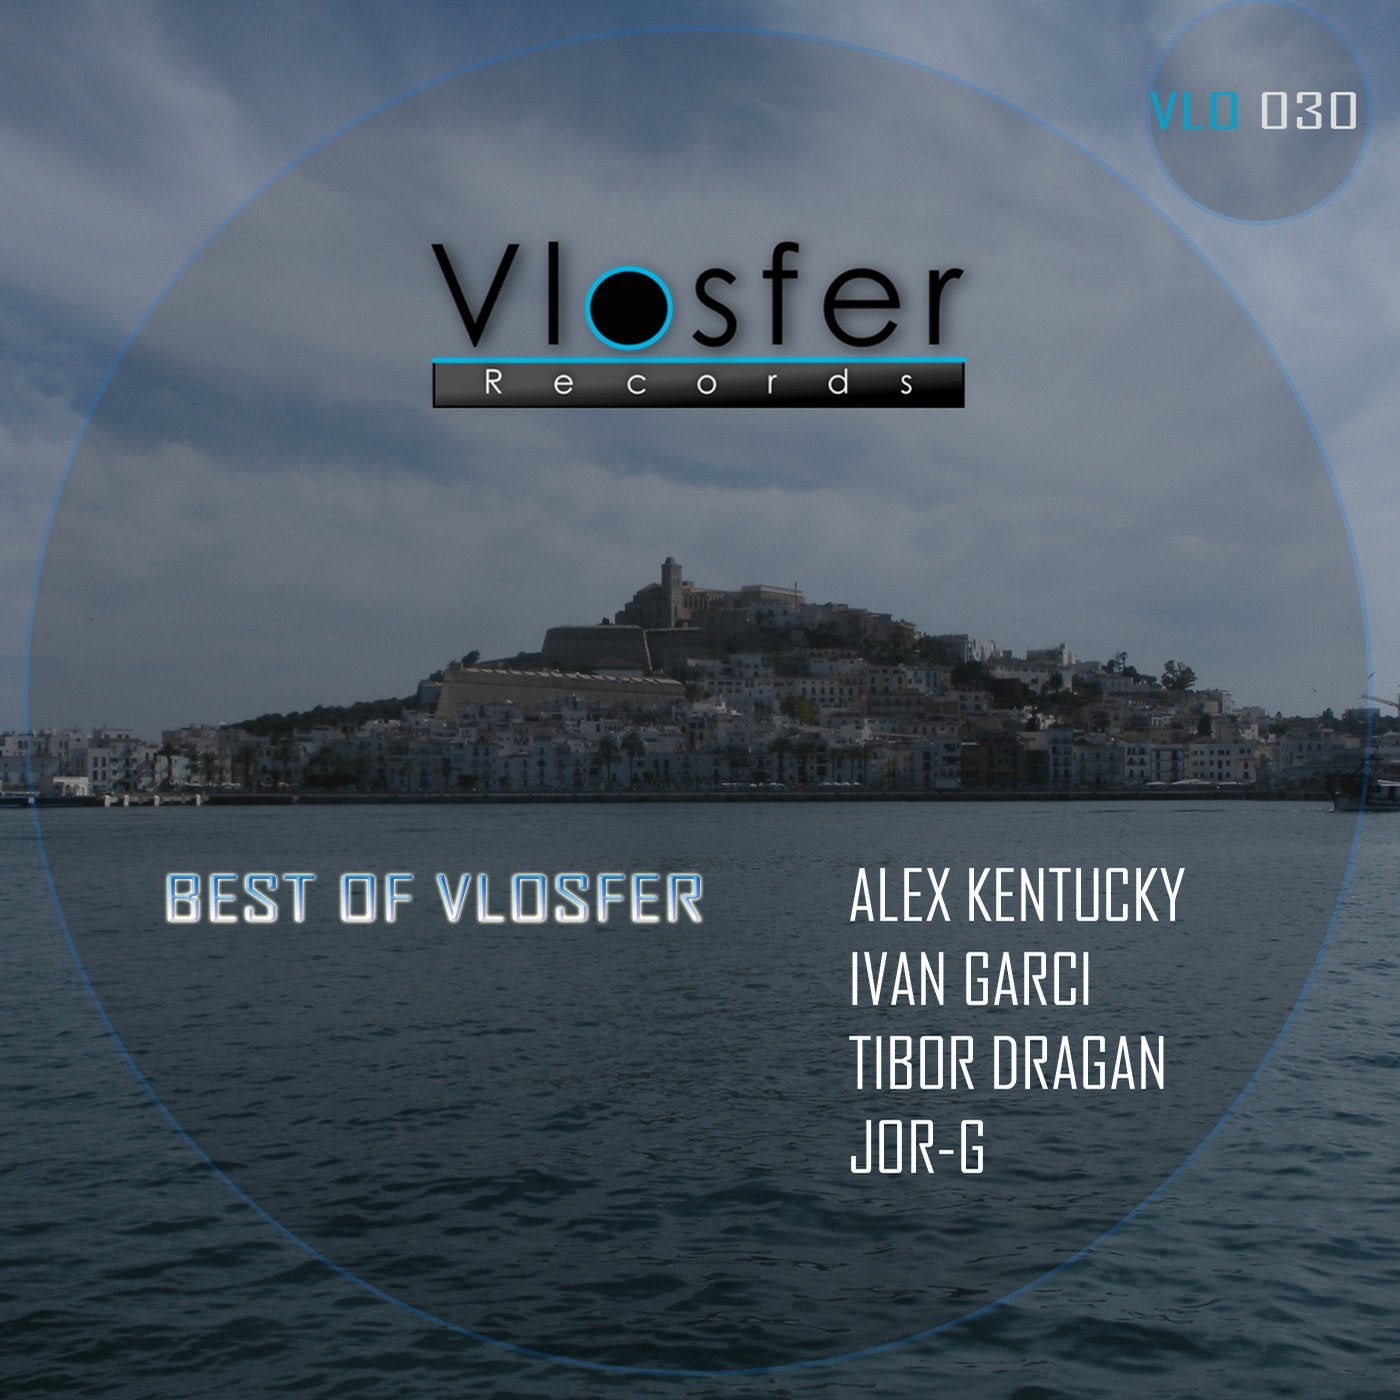 Best of Vlosfer